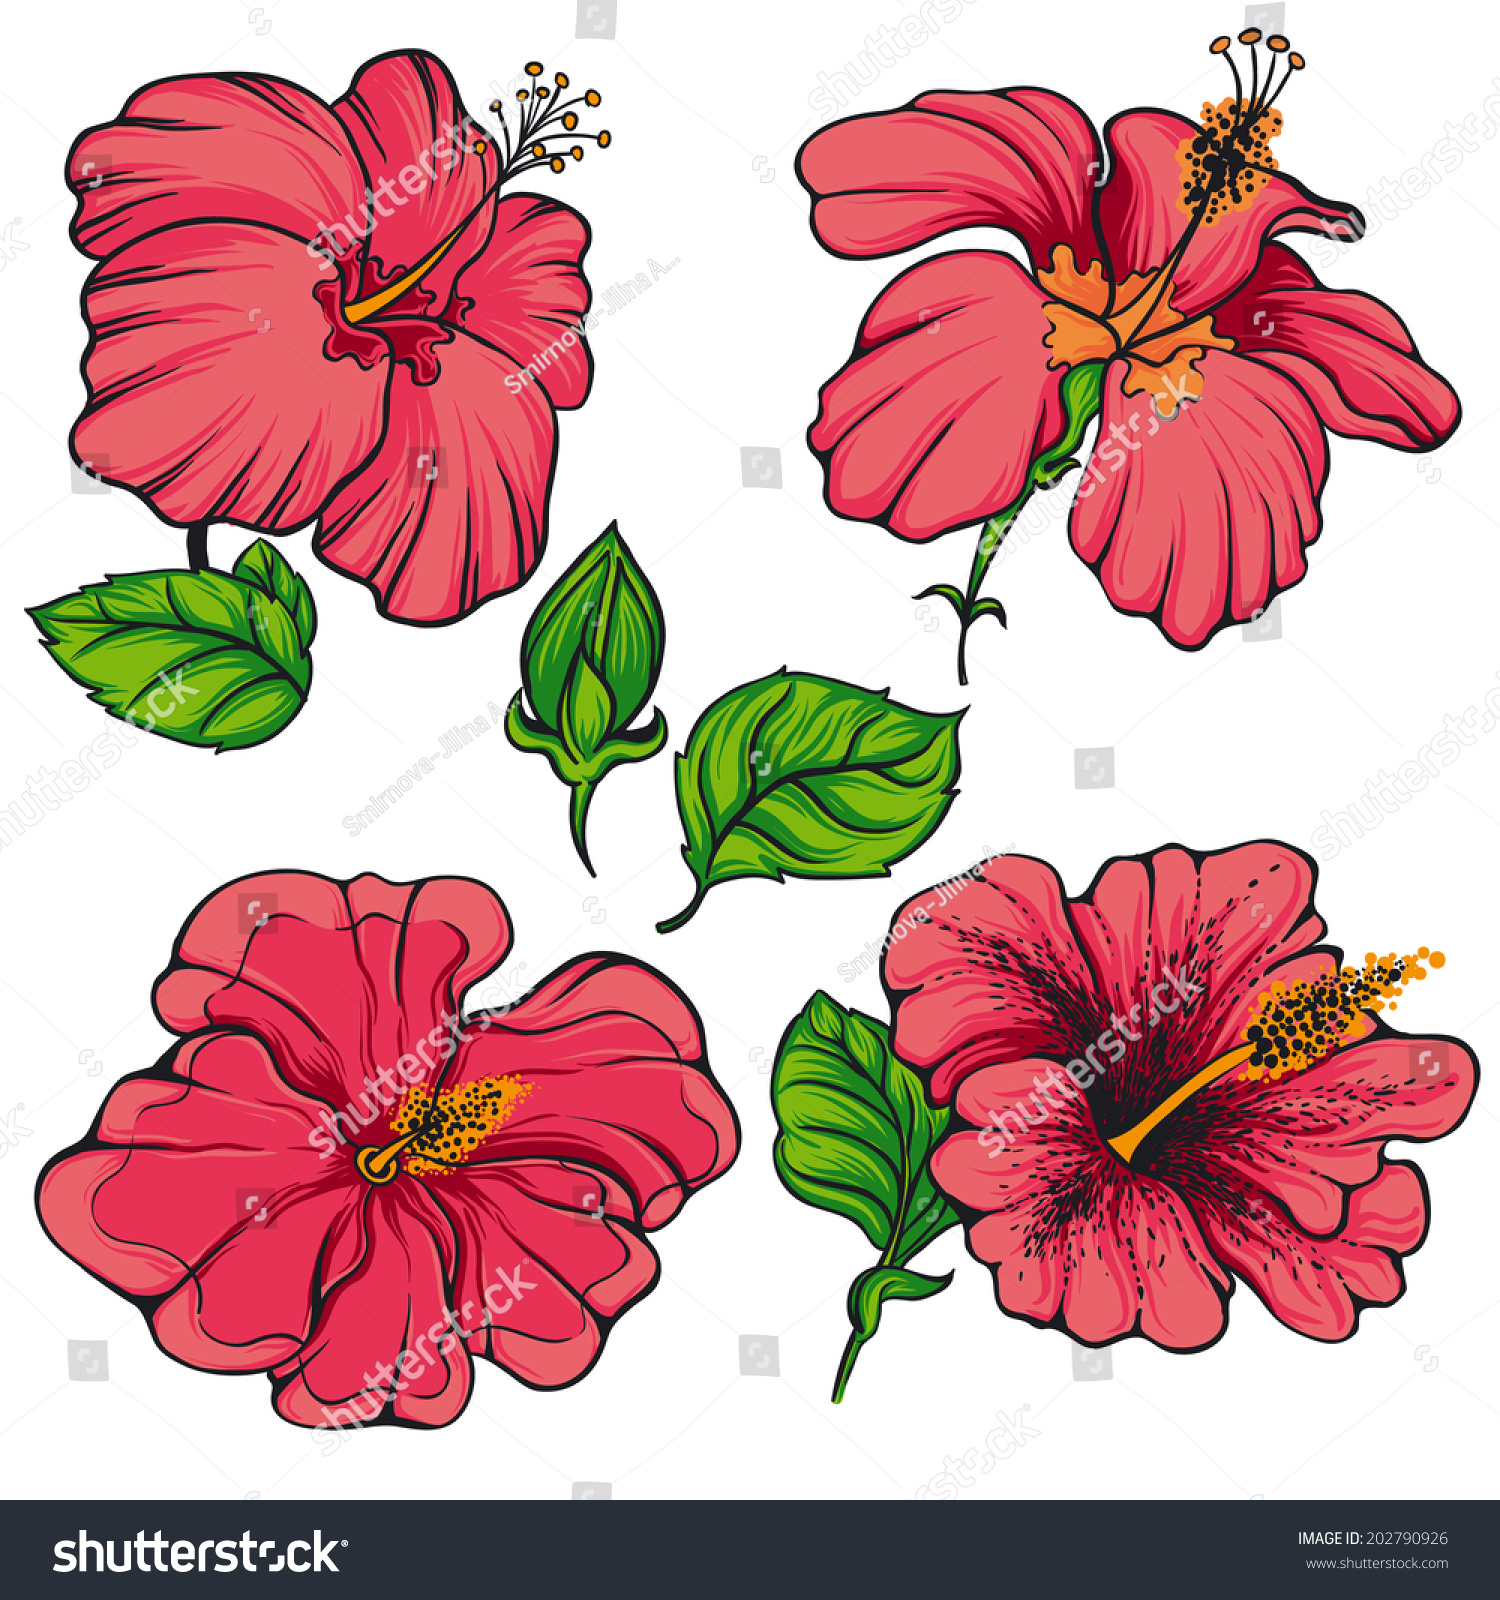 Hibiscus Flower Vector Stock Vector (Royalty Free) 202790926